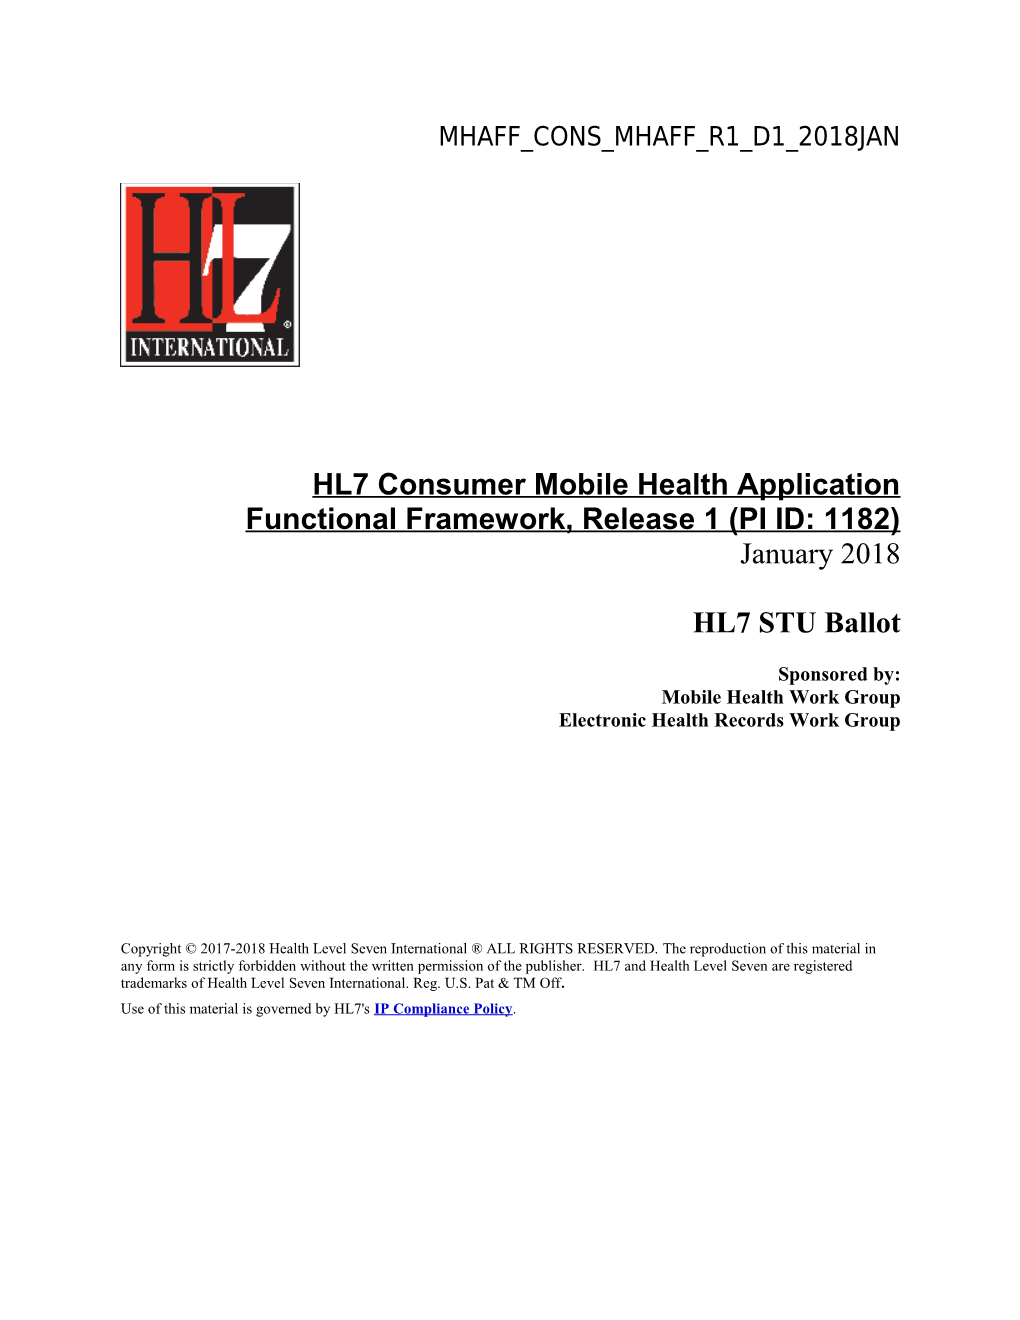 HL7 Consumer Mobile Health Application Functional Framework, Release 1 (PI ID: 1182)